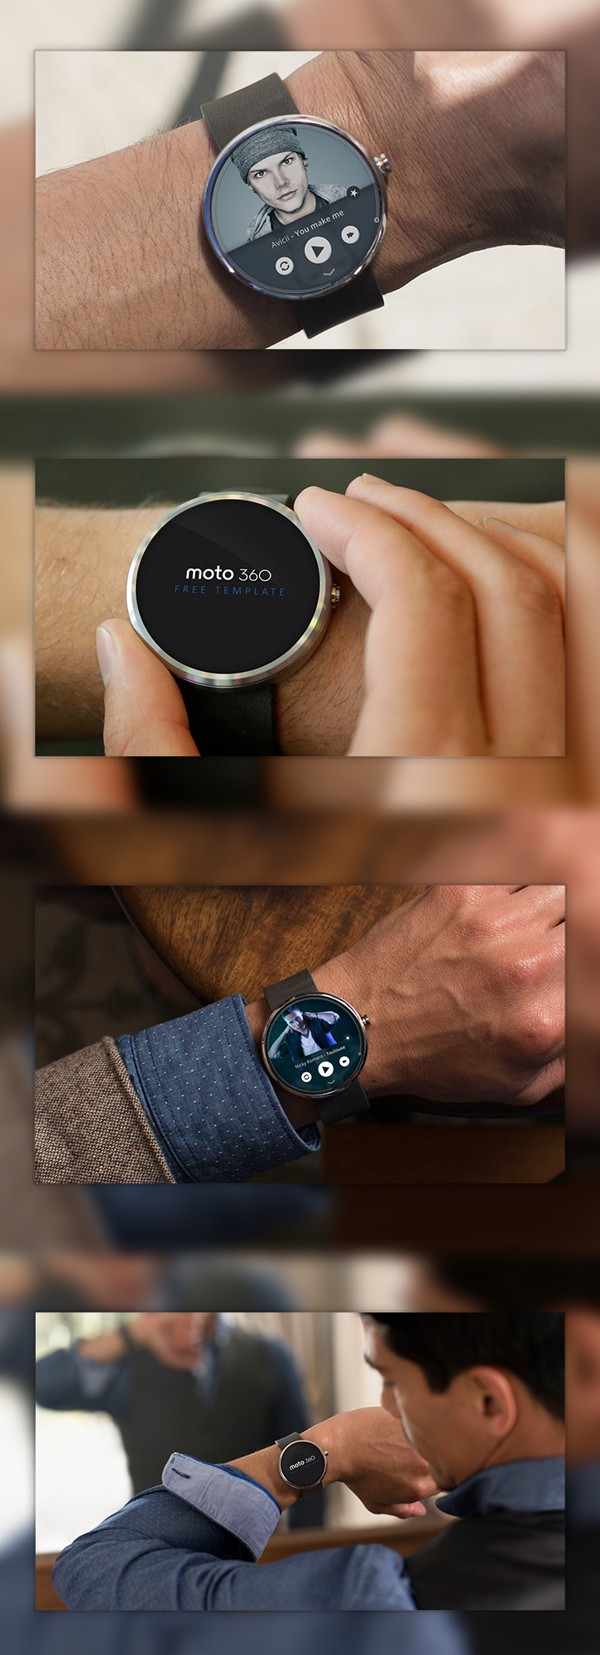 Moto360 Photorealistic Mockup